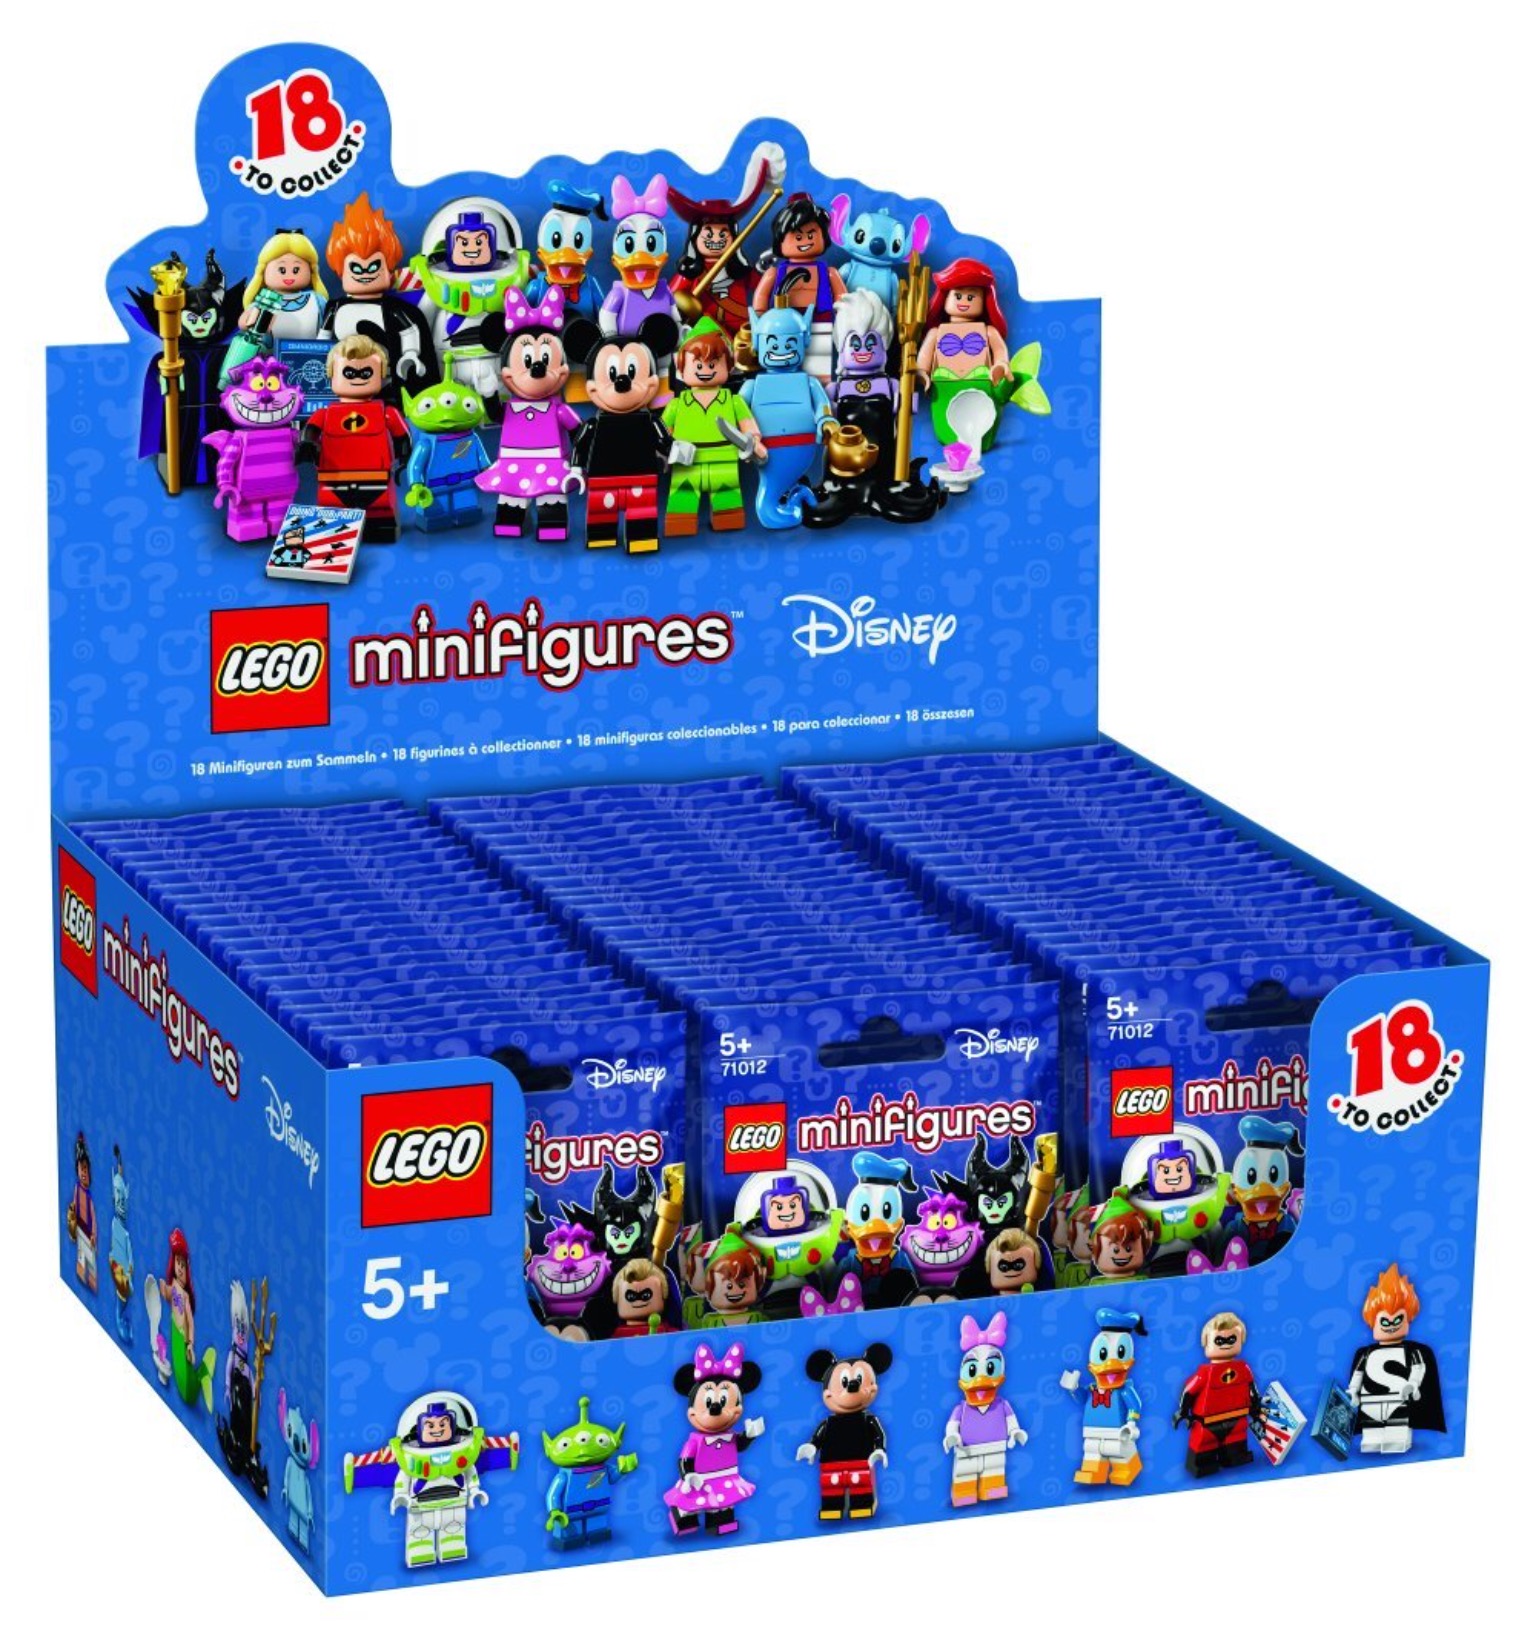 LEGO 71012-16 Minifigures The Disney Series (Captain Hook